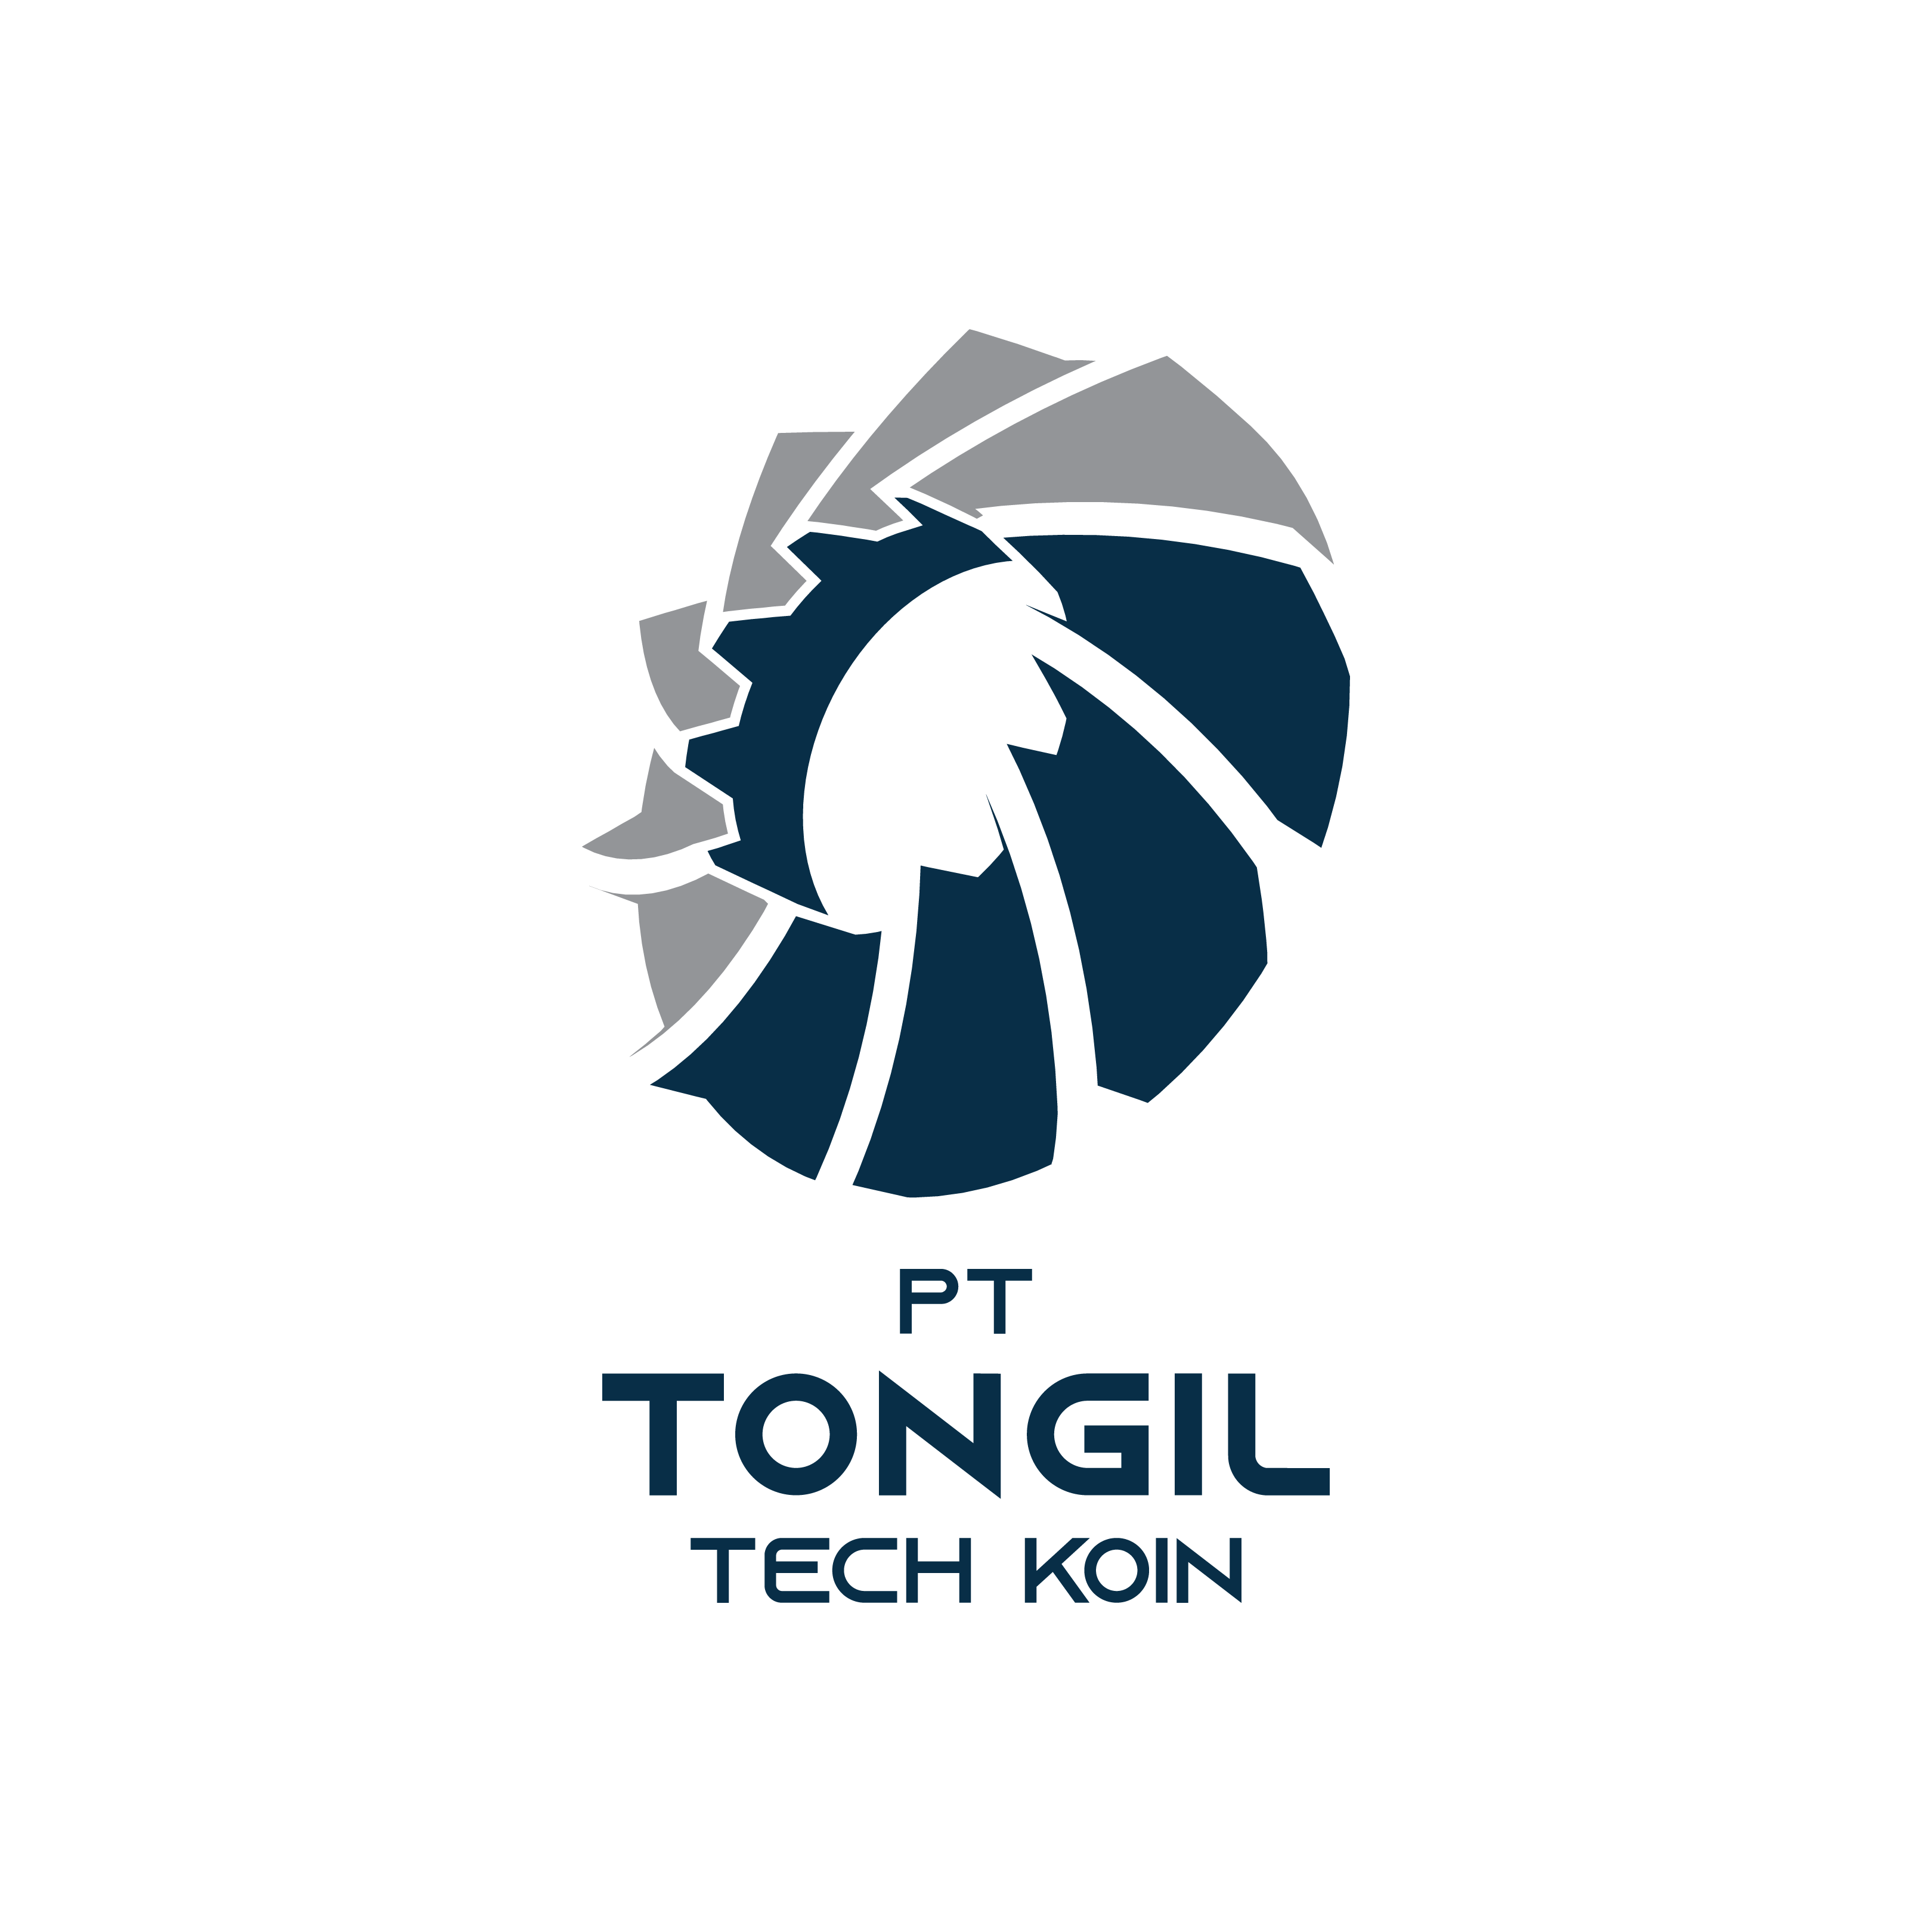 20_Logo_Tongil Tech Koin, PT 1